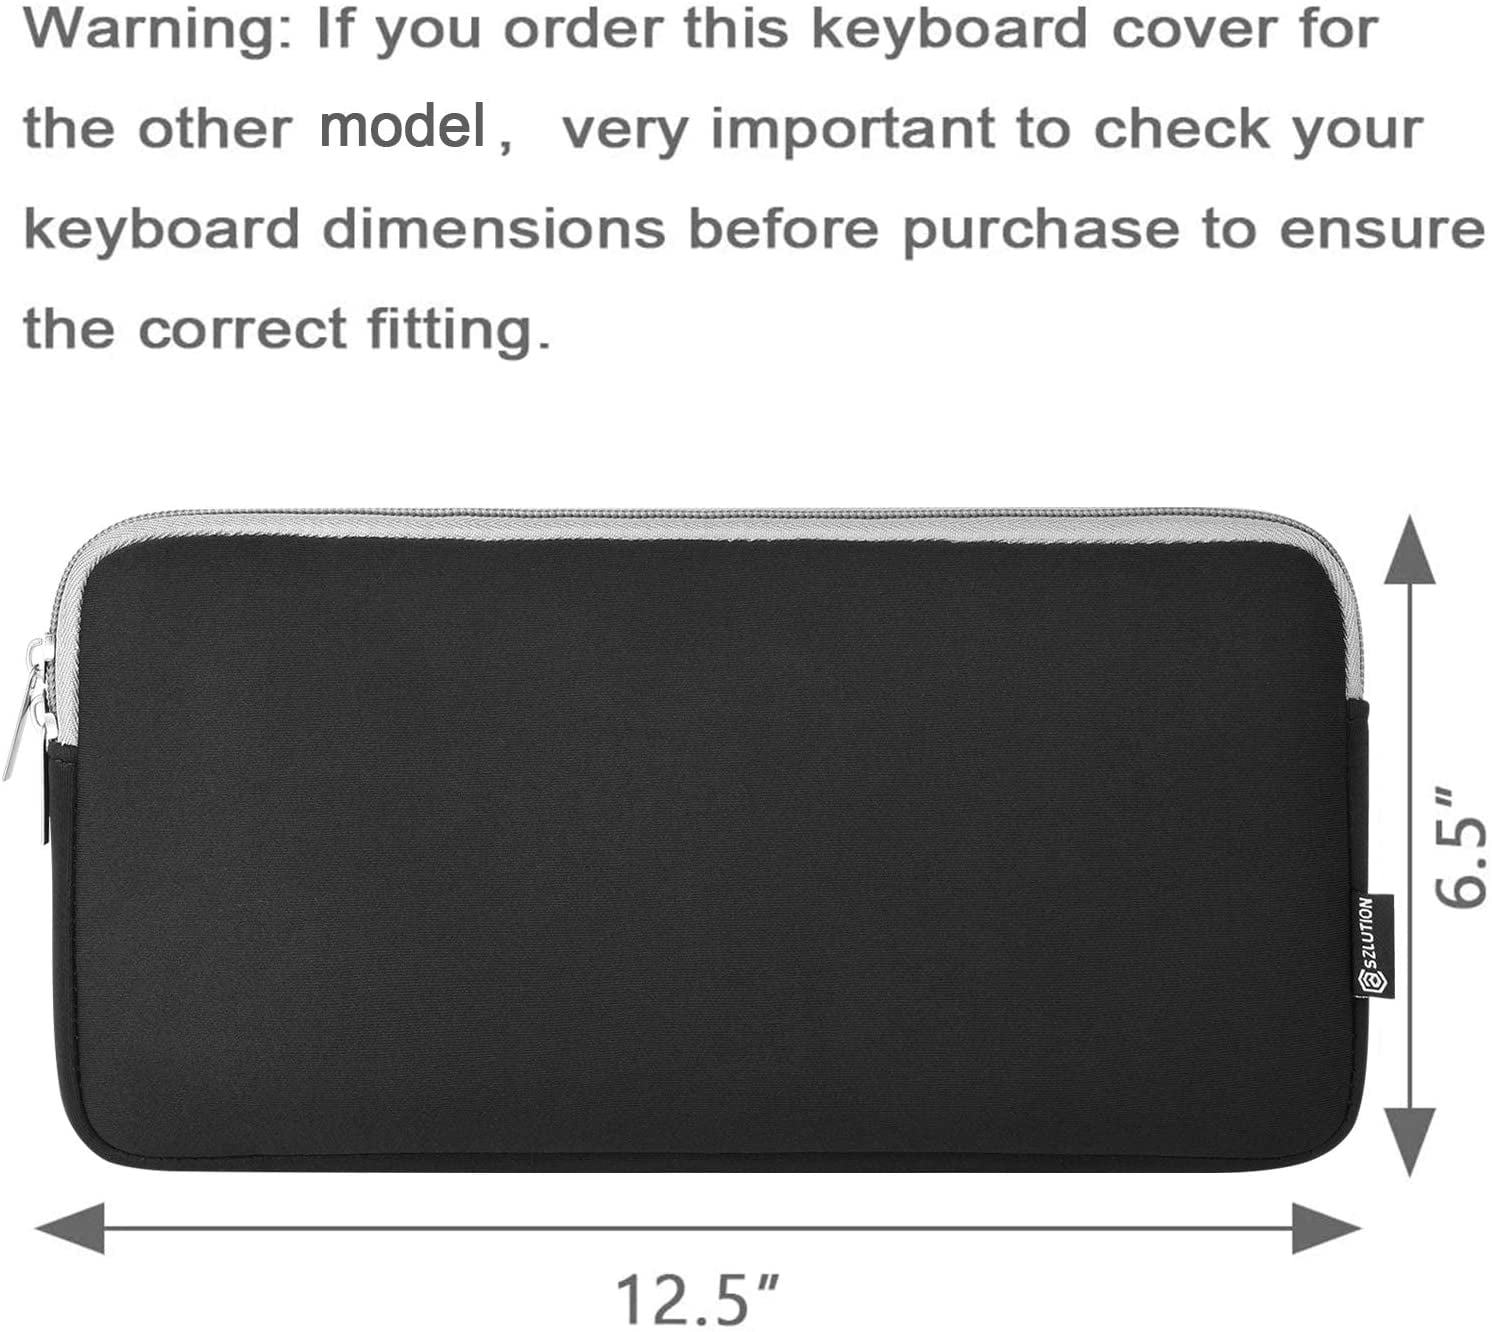 Case Star Neoprene Keyboard Sleeve Case Bag with Zipper for Apple Bluetooth Wireless Keyboard MC184LL/B Turquoise Blue Color